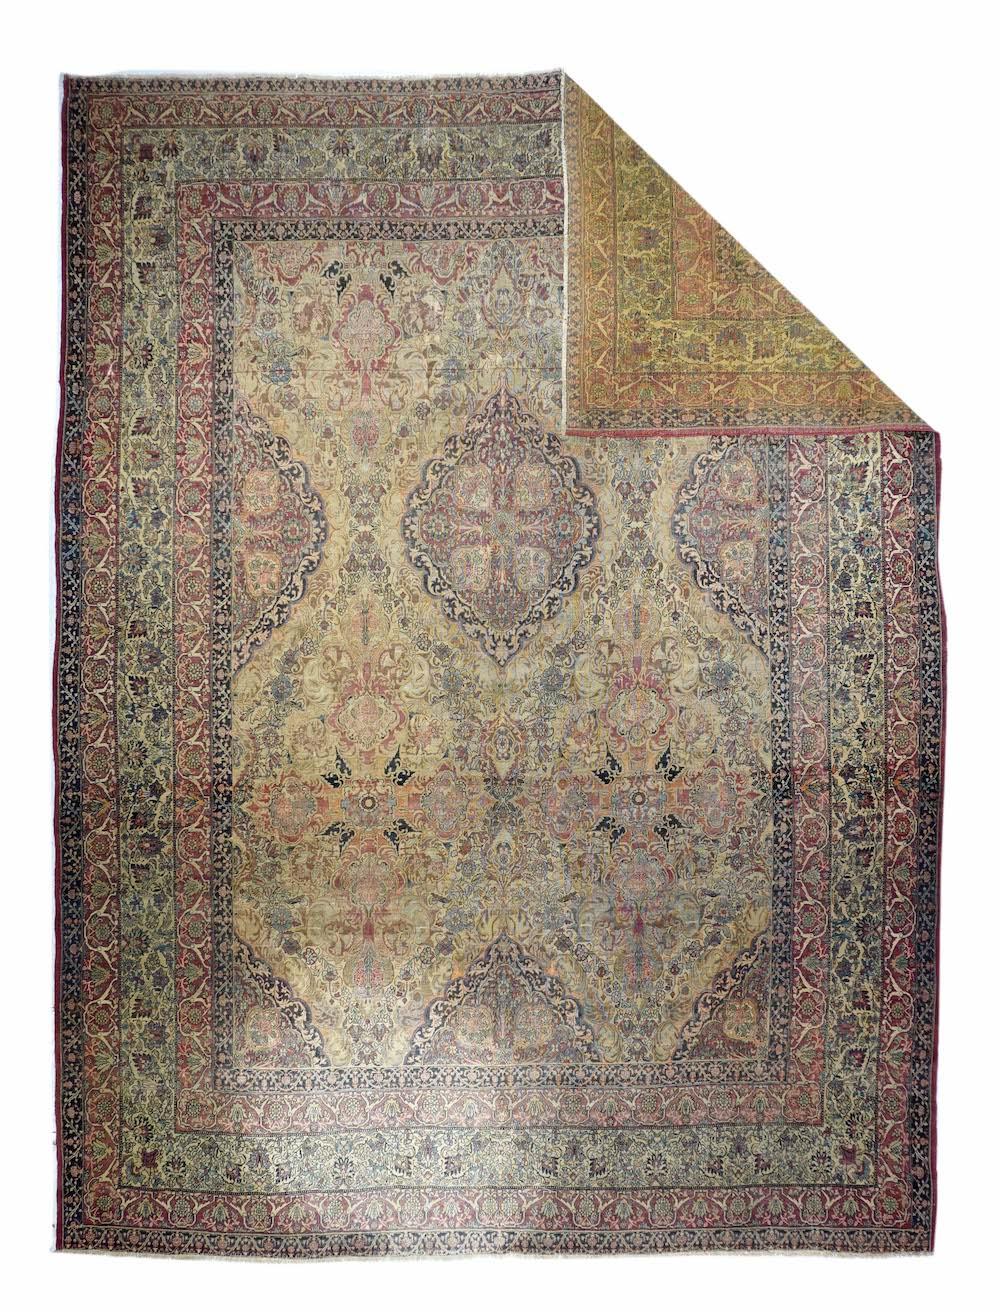 Antique Lavar Kerman rug 10'3'' x 13'5''.